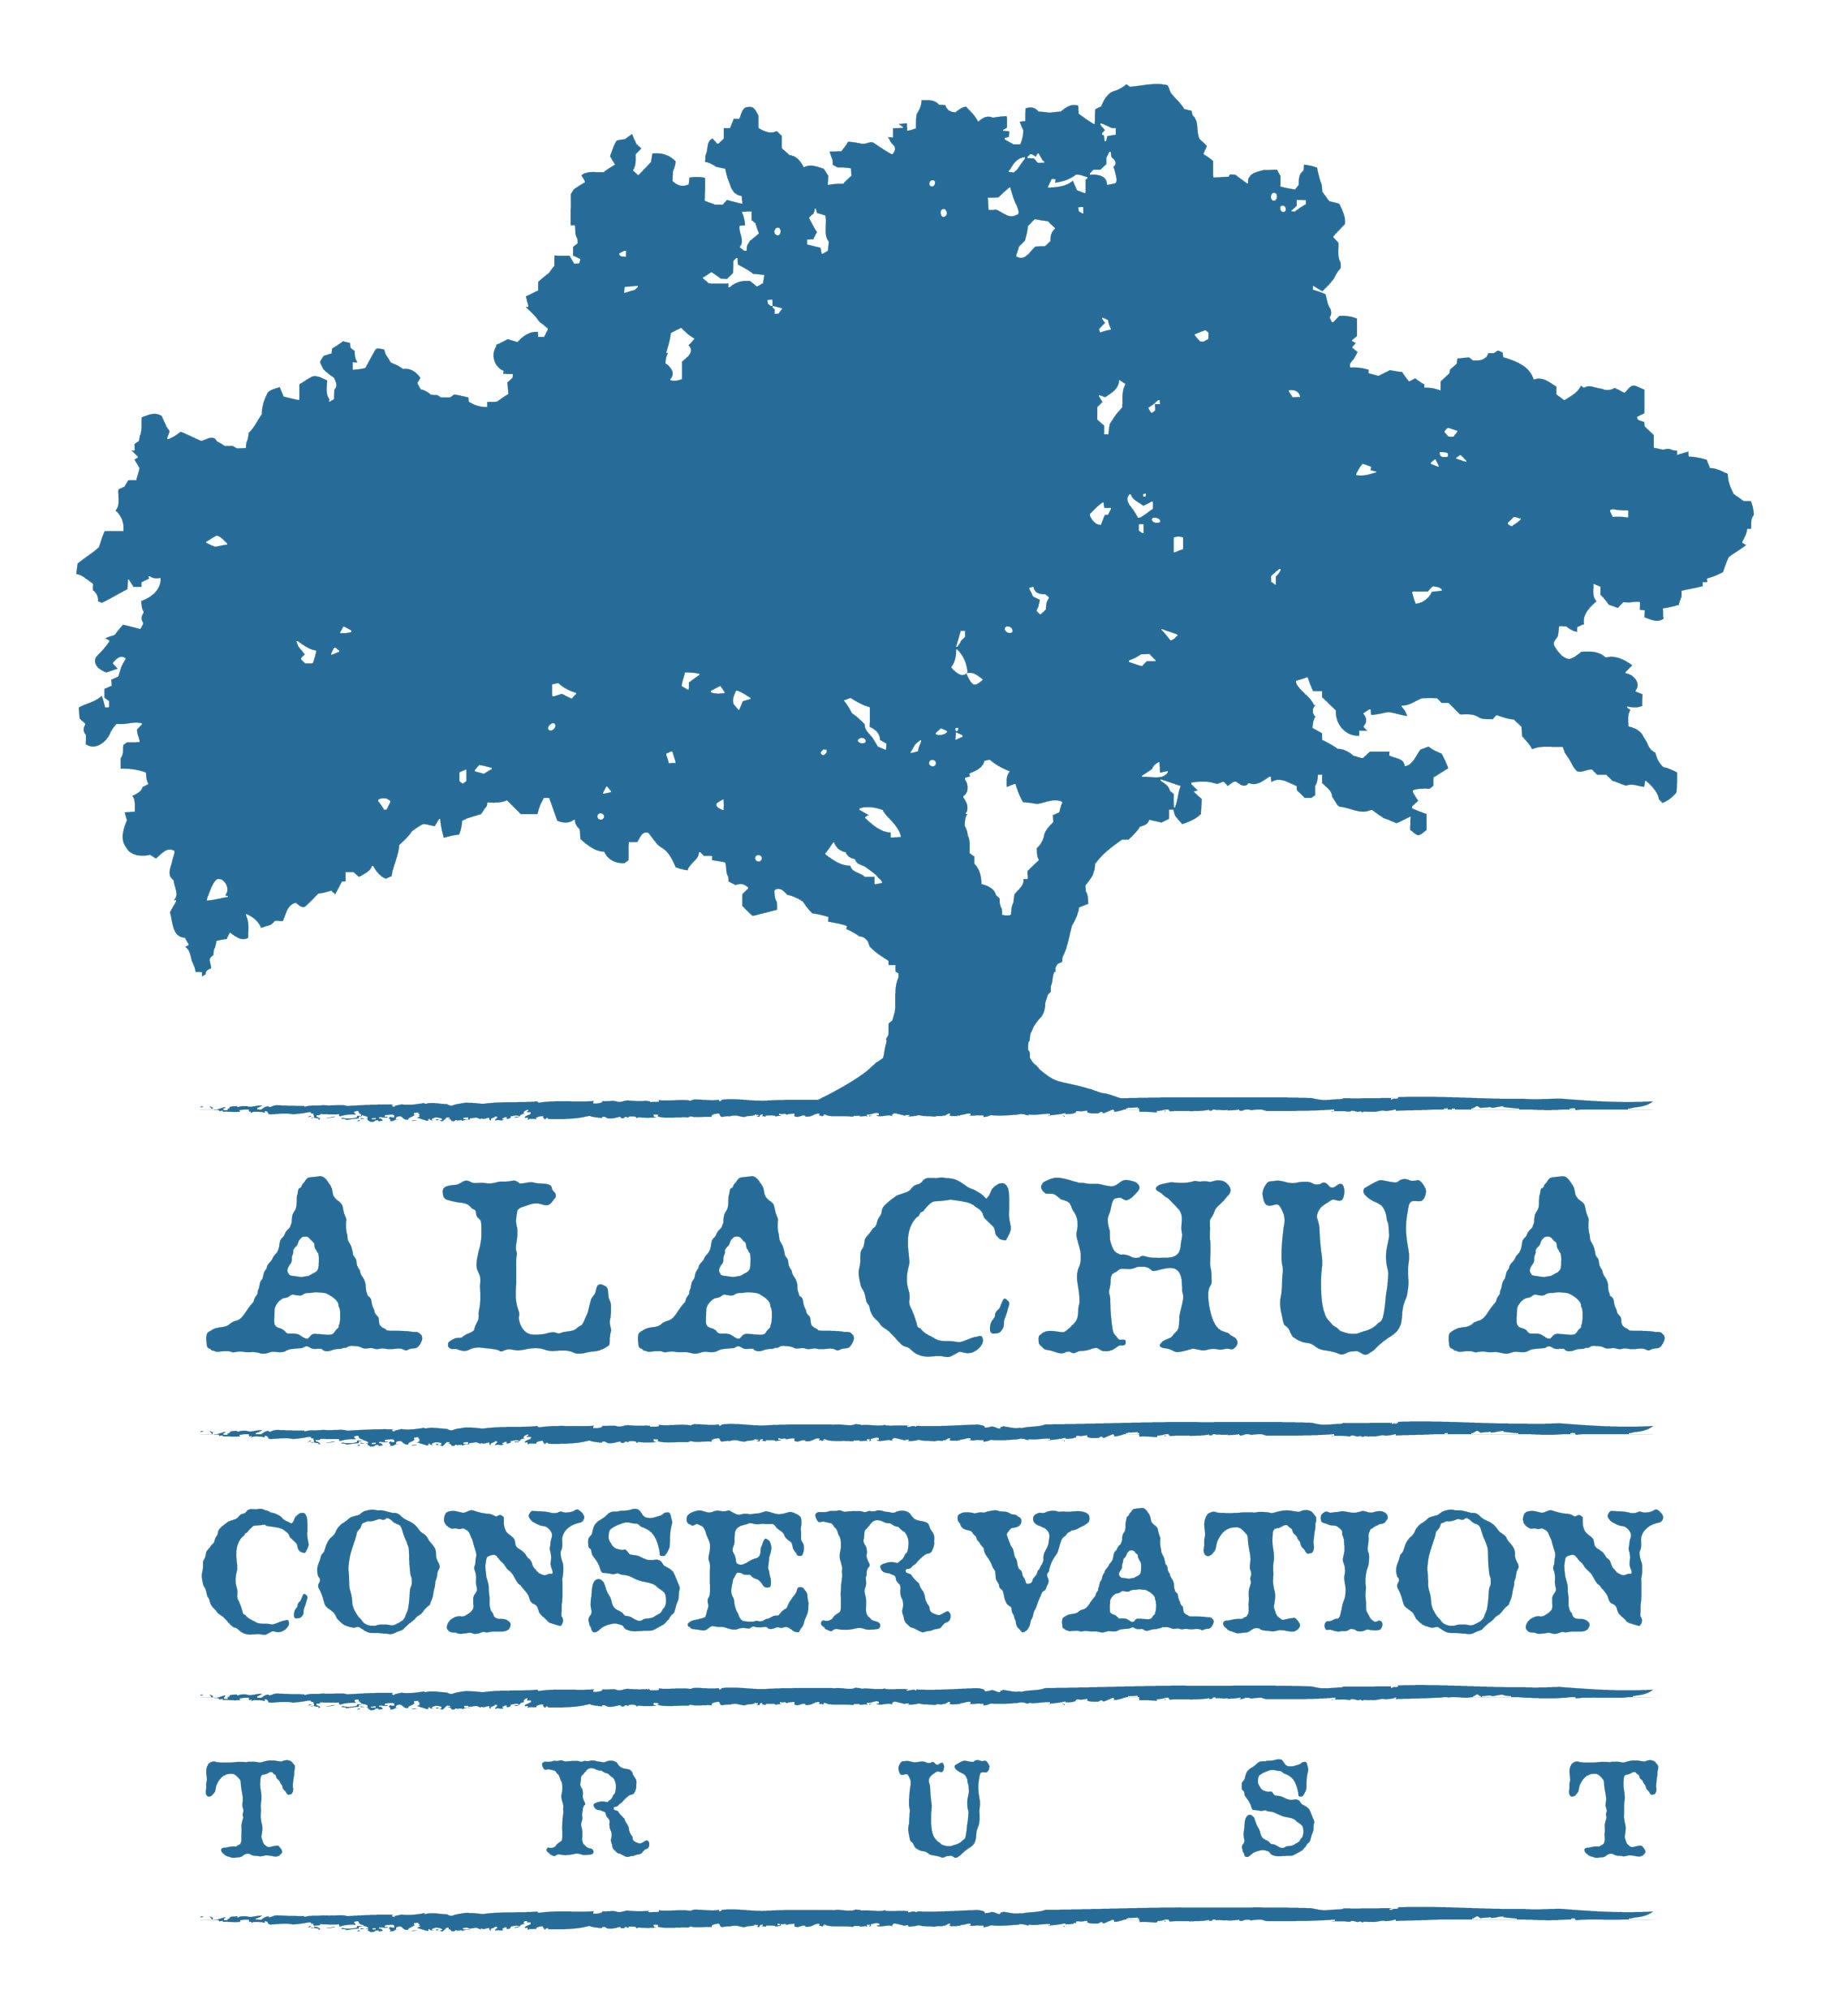 Alachua Conservation Trust